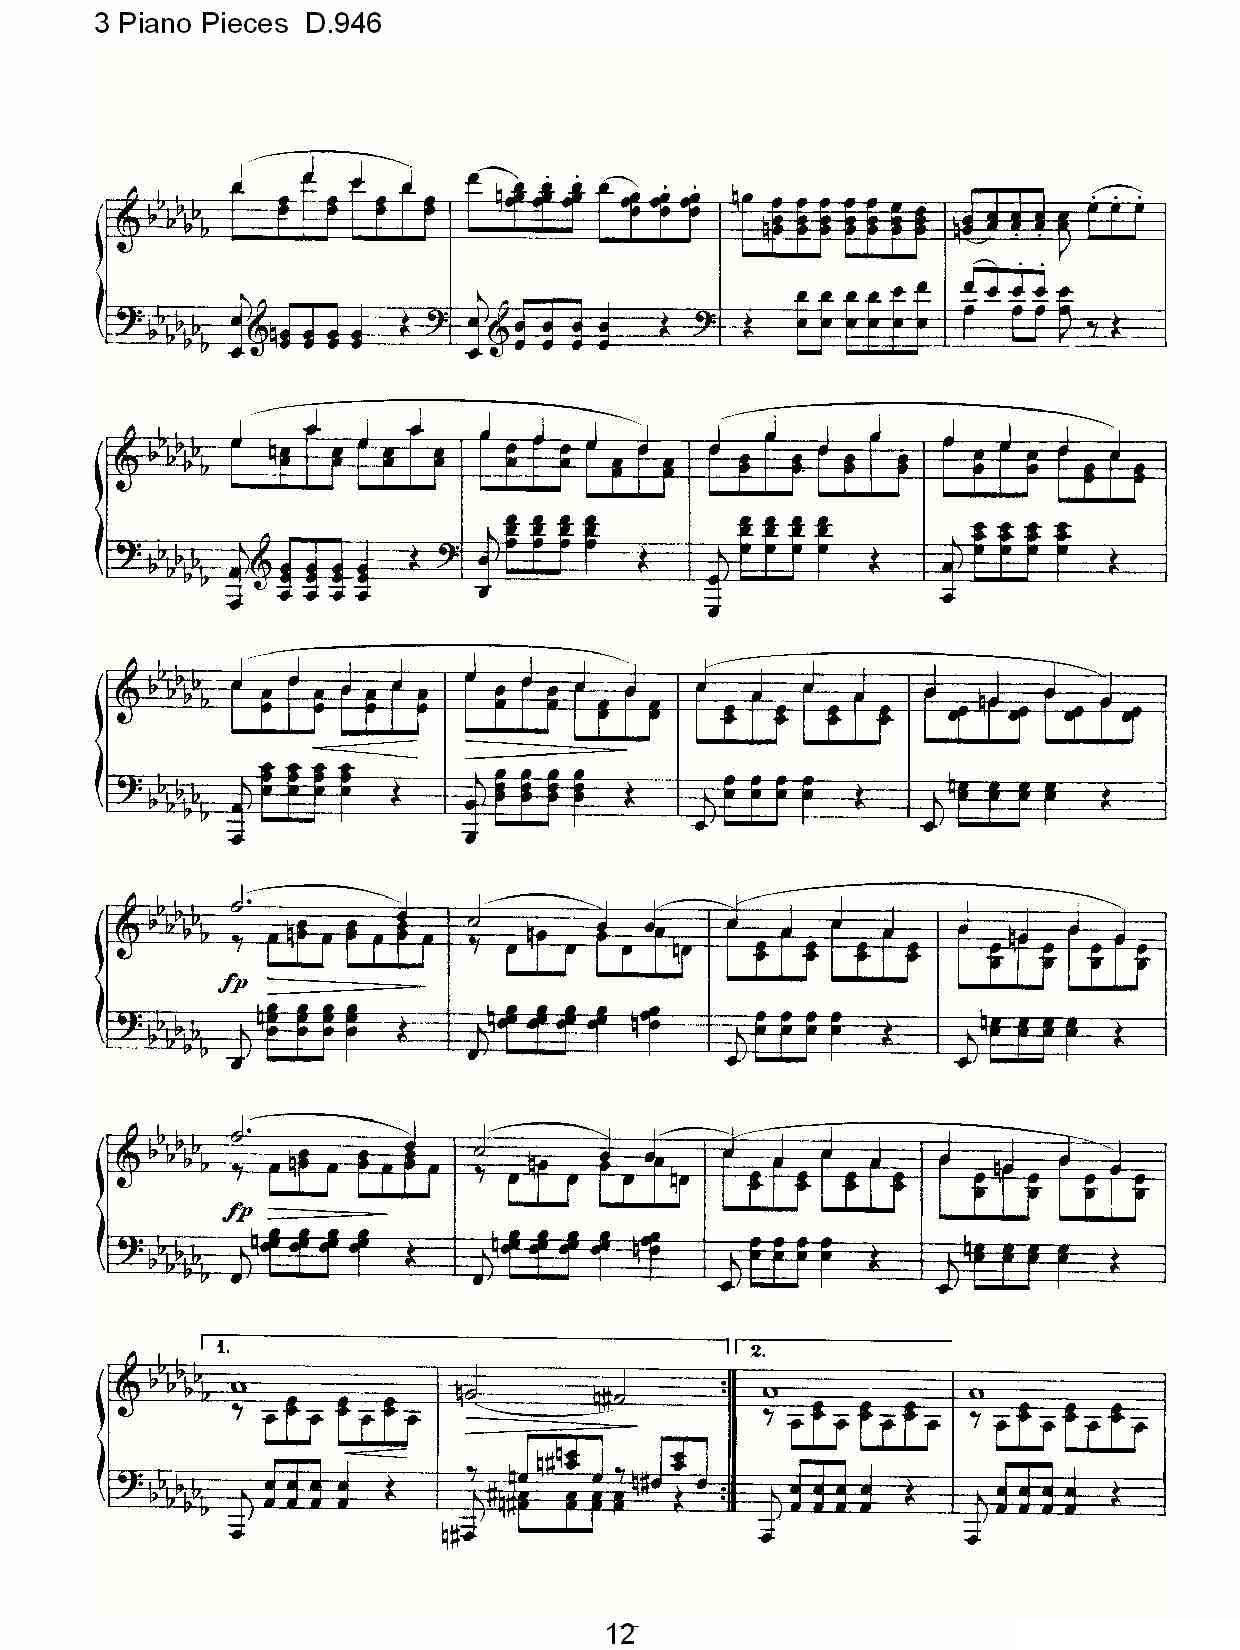 3 Piano Pieces D.946（钢琴三联奏D.946）钢琴曲谱（图12）